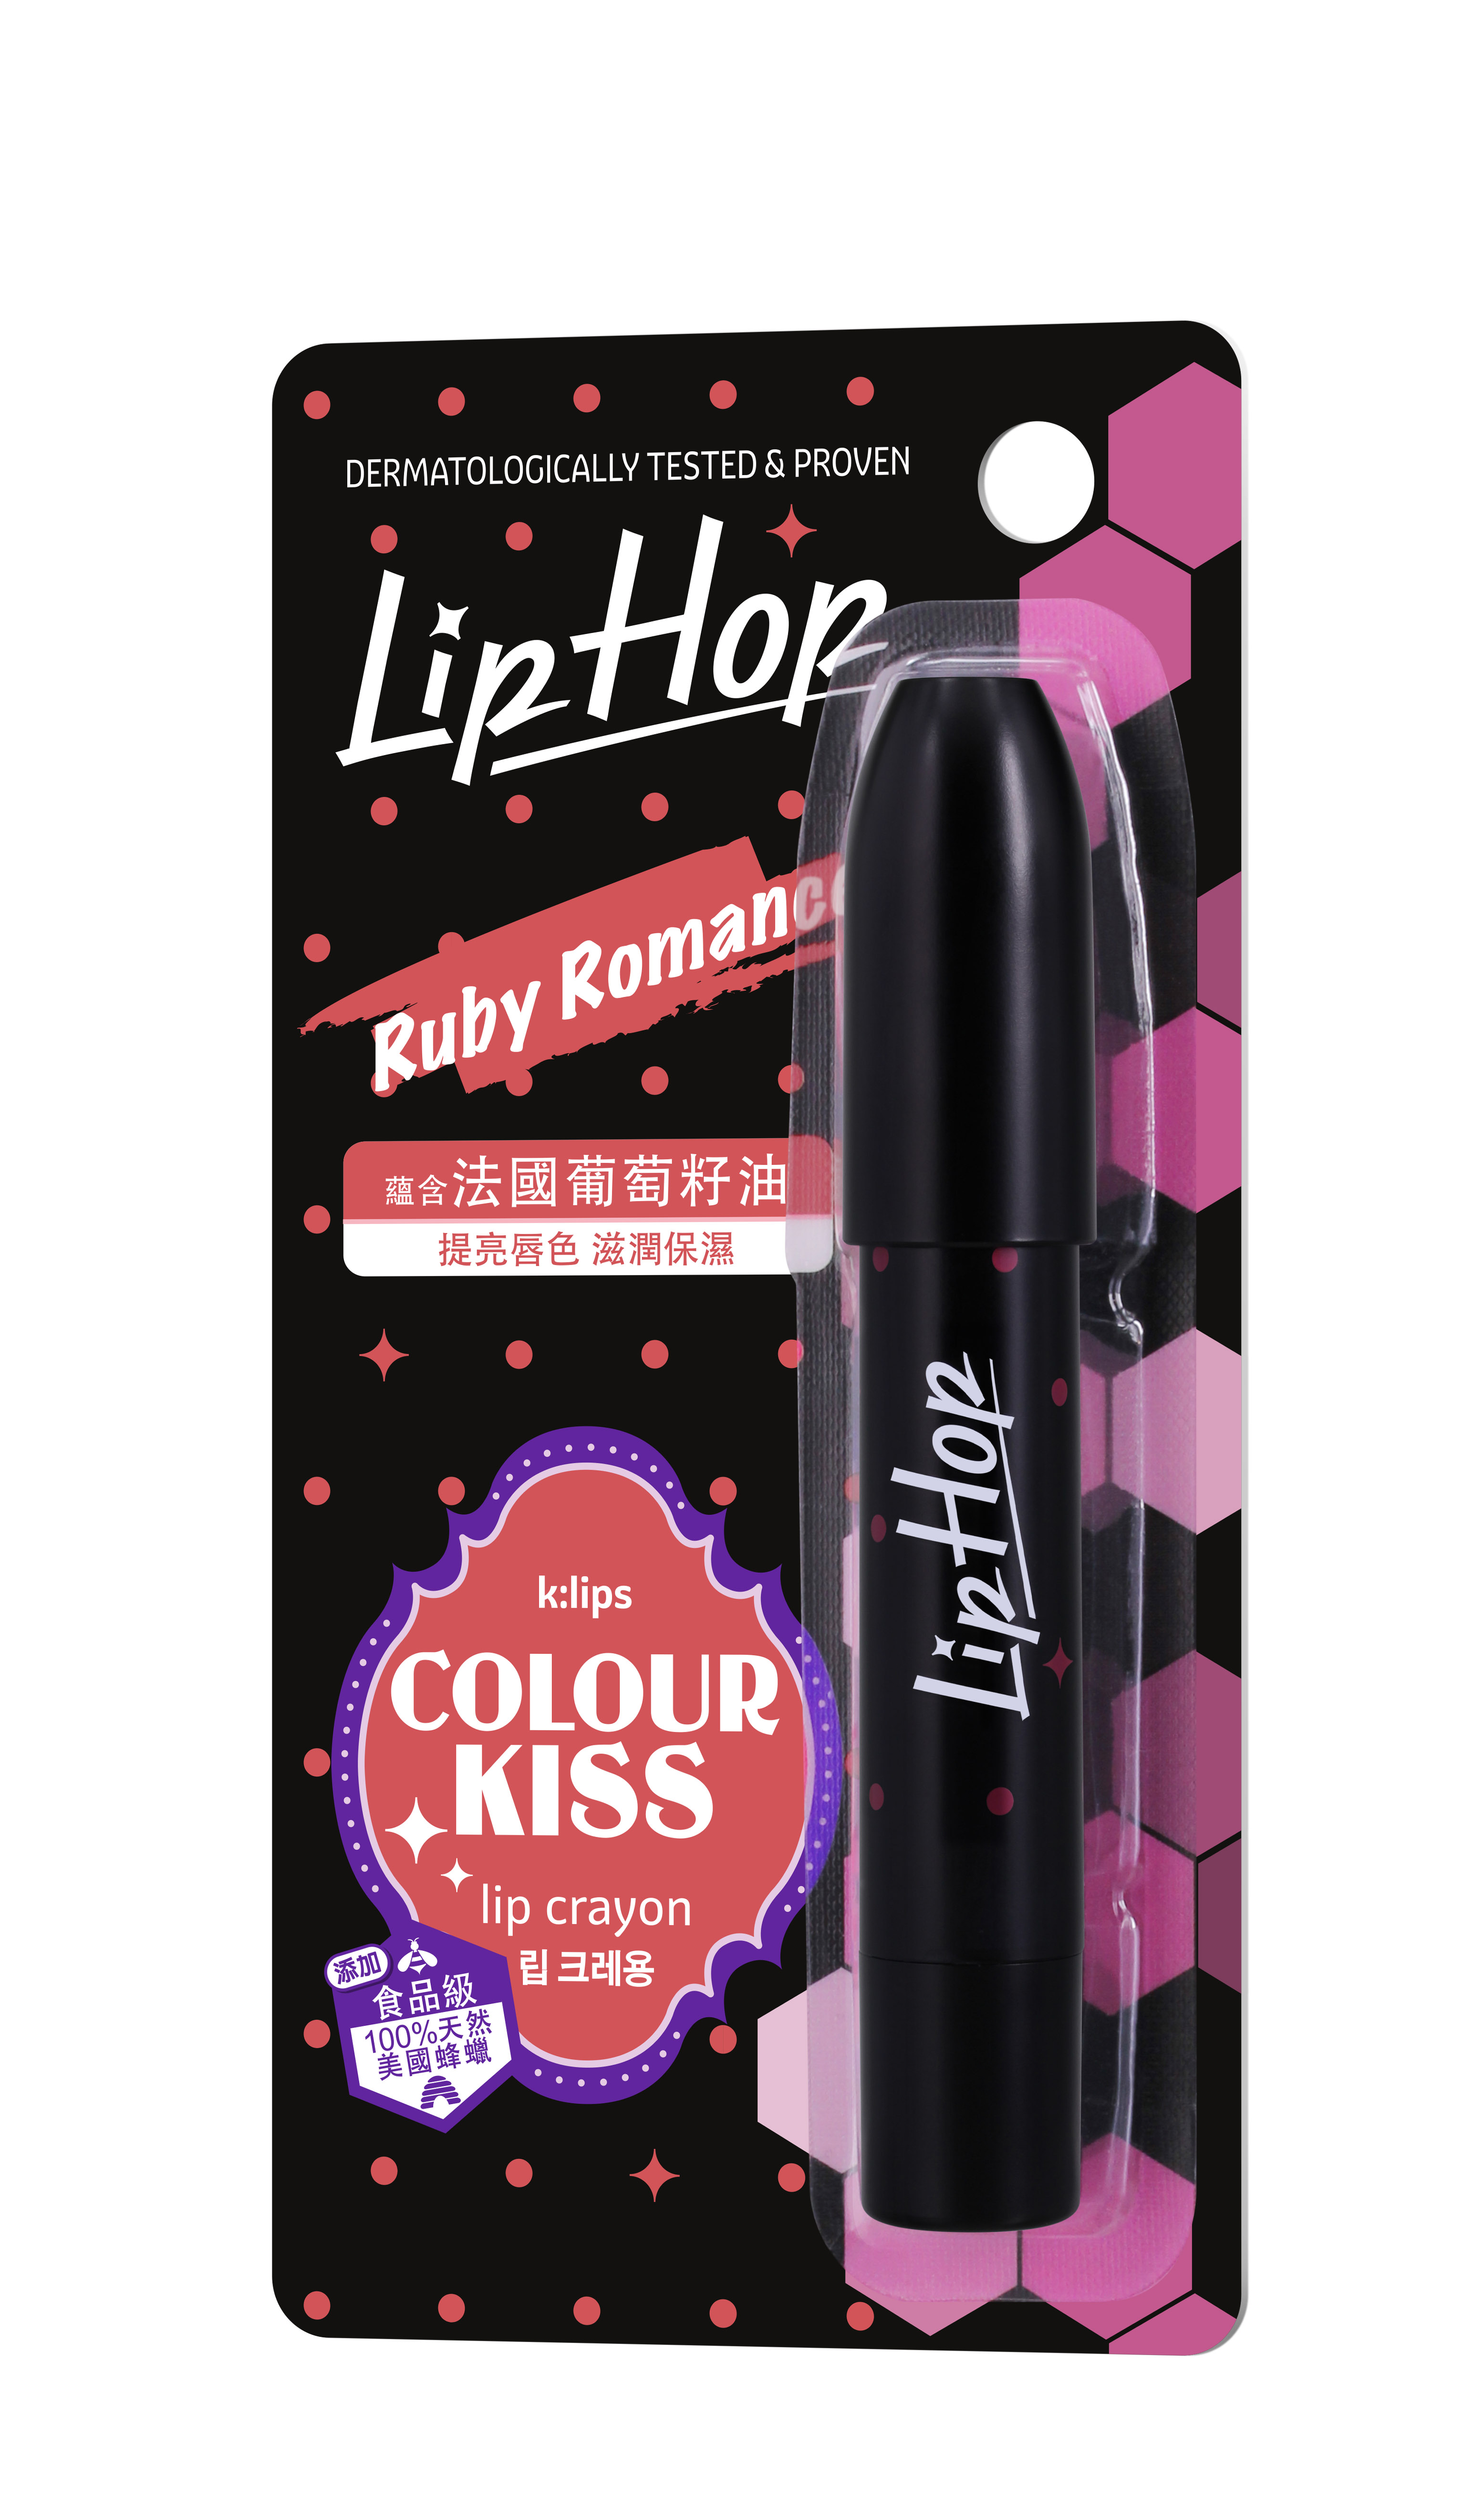 LipHop Colour Kiss潤唇筆 –紅寶浪漫色，秋冬絕配，無須濃妝艷抹，啞緻淡紅中保持一份型格感覺。蘊含杏桃仁油及法國葡萄籽油，滋潤同時抗氧化。標準價：$ 52.9